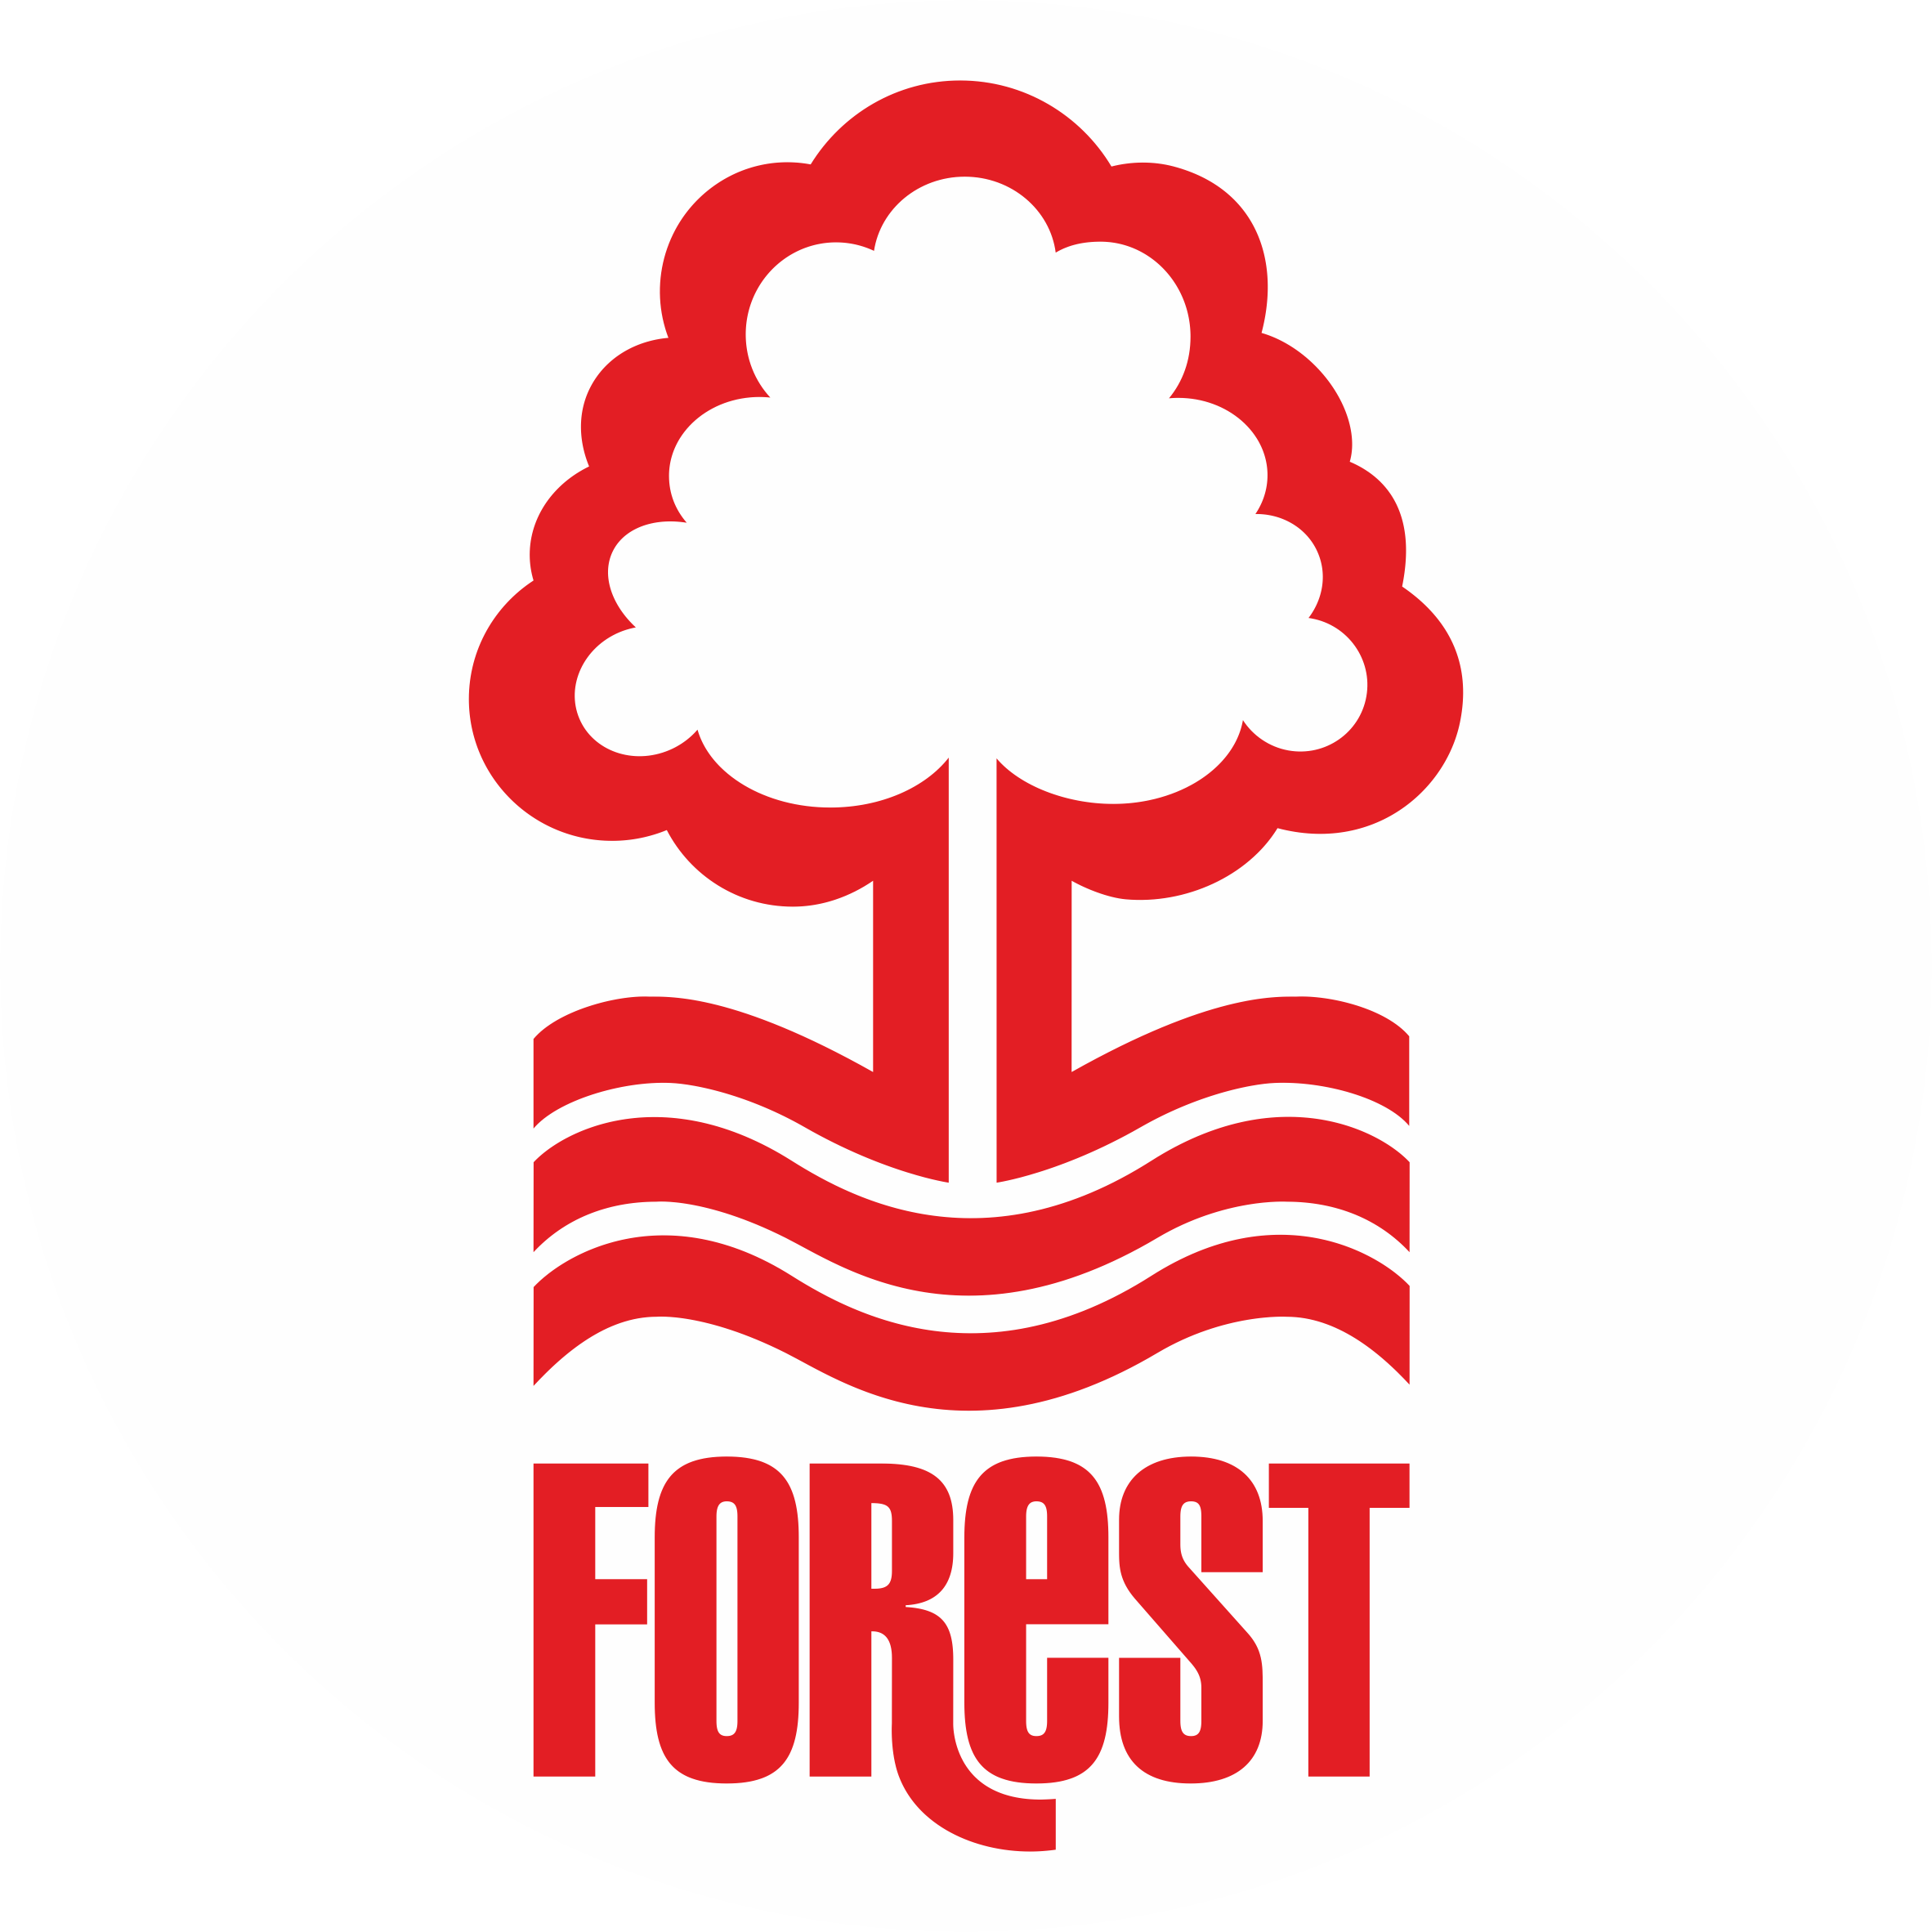 Finance Director - Nottingham Forest Football Club Logo